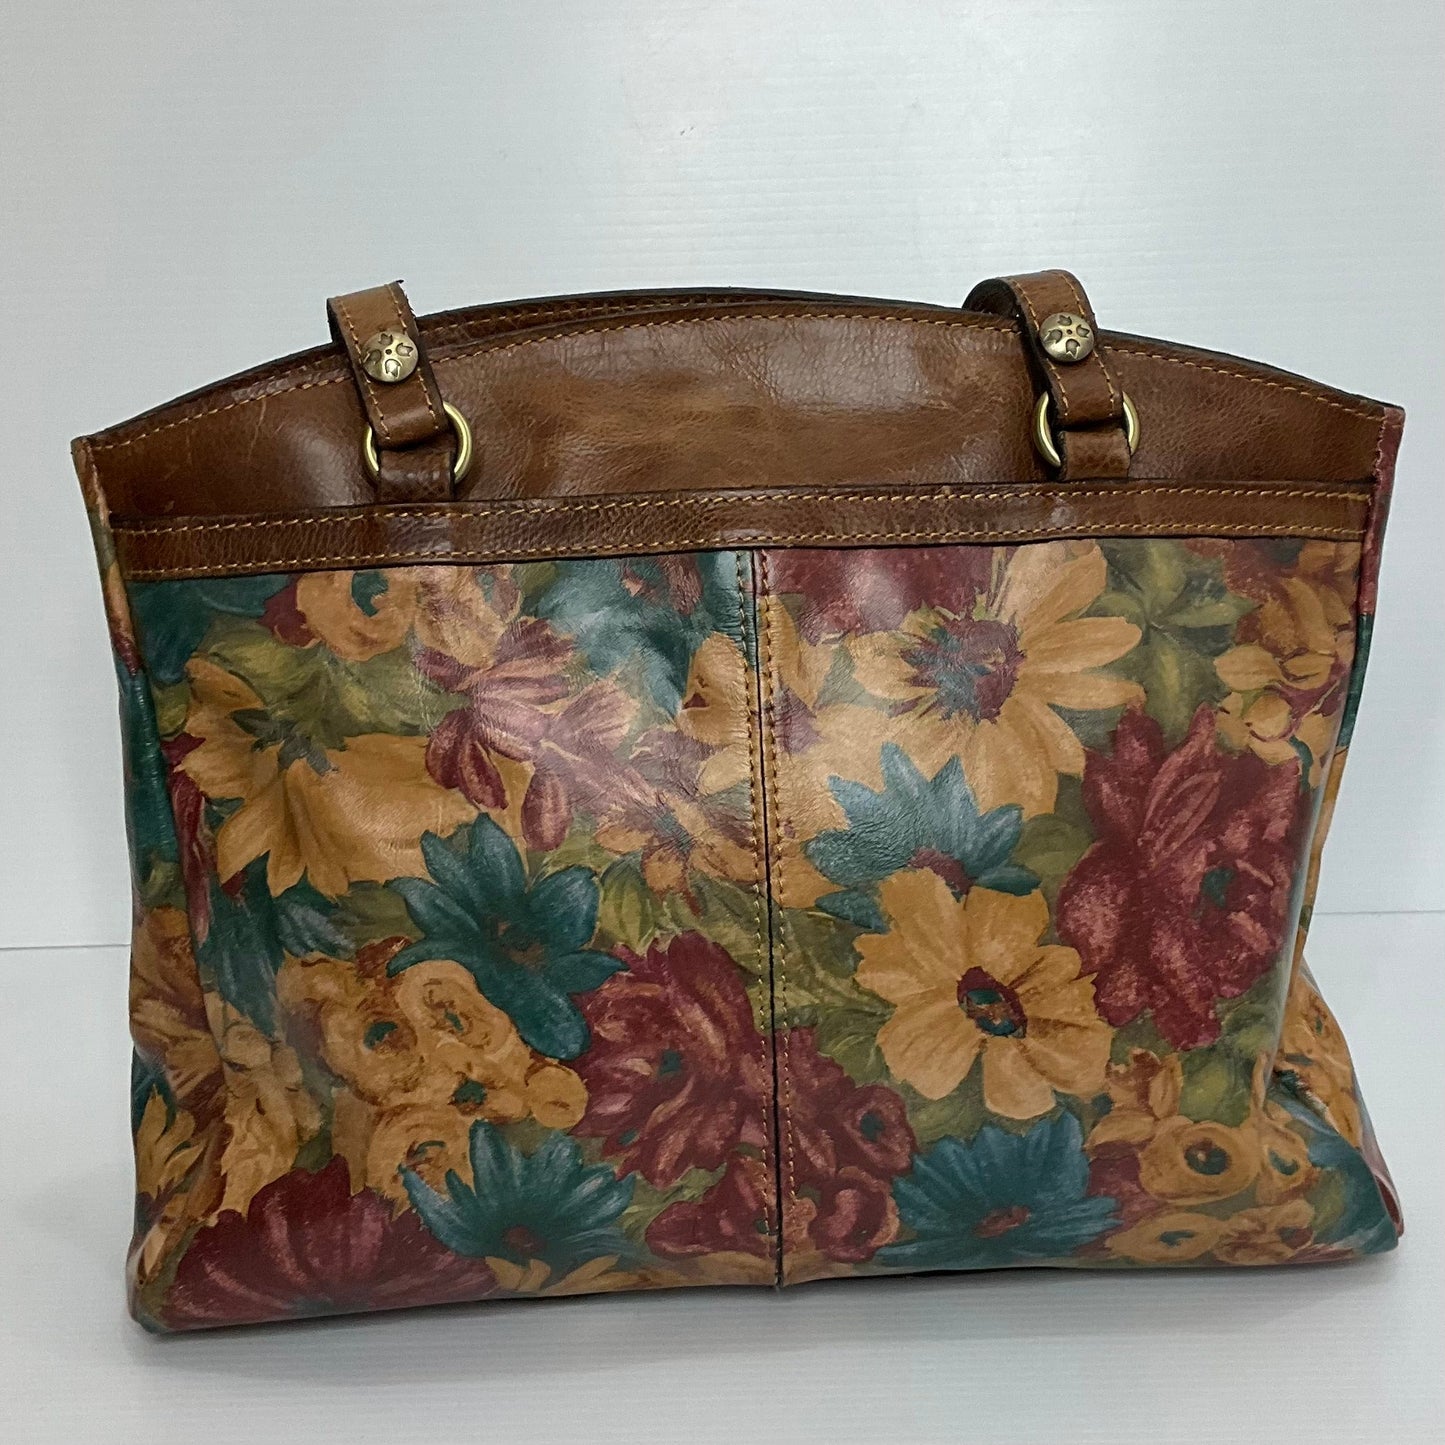 Handbag Designer Patricia Nash, Size Medium